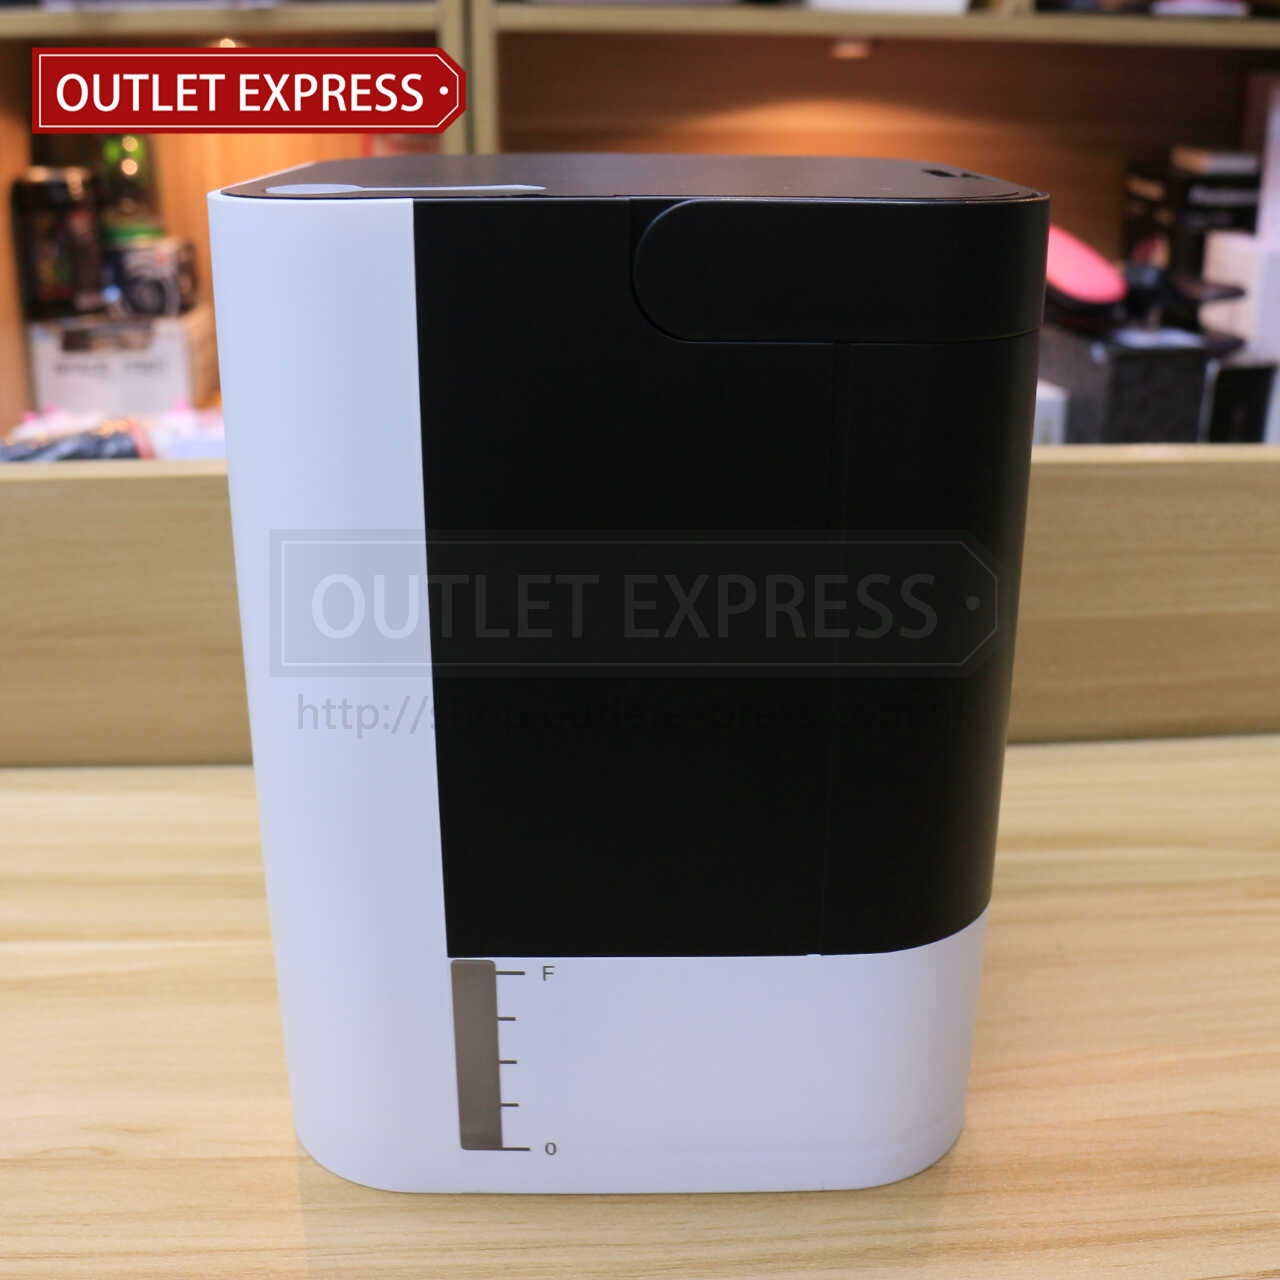 IDI USB 納米攜帶冷風機 側面圖- Outlet Express HK生活百貨城實拍相片